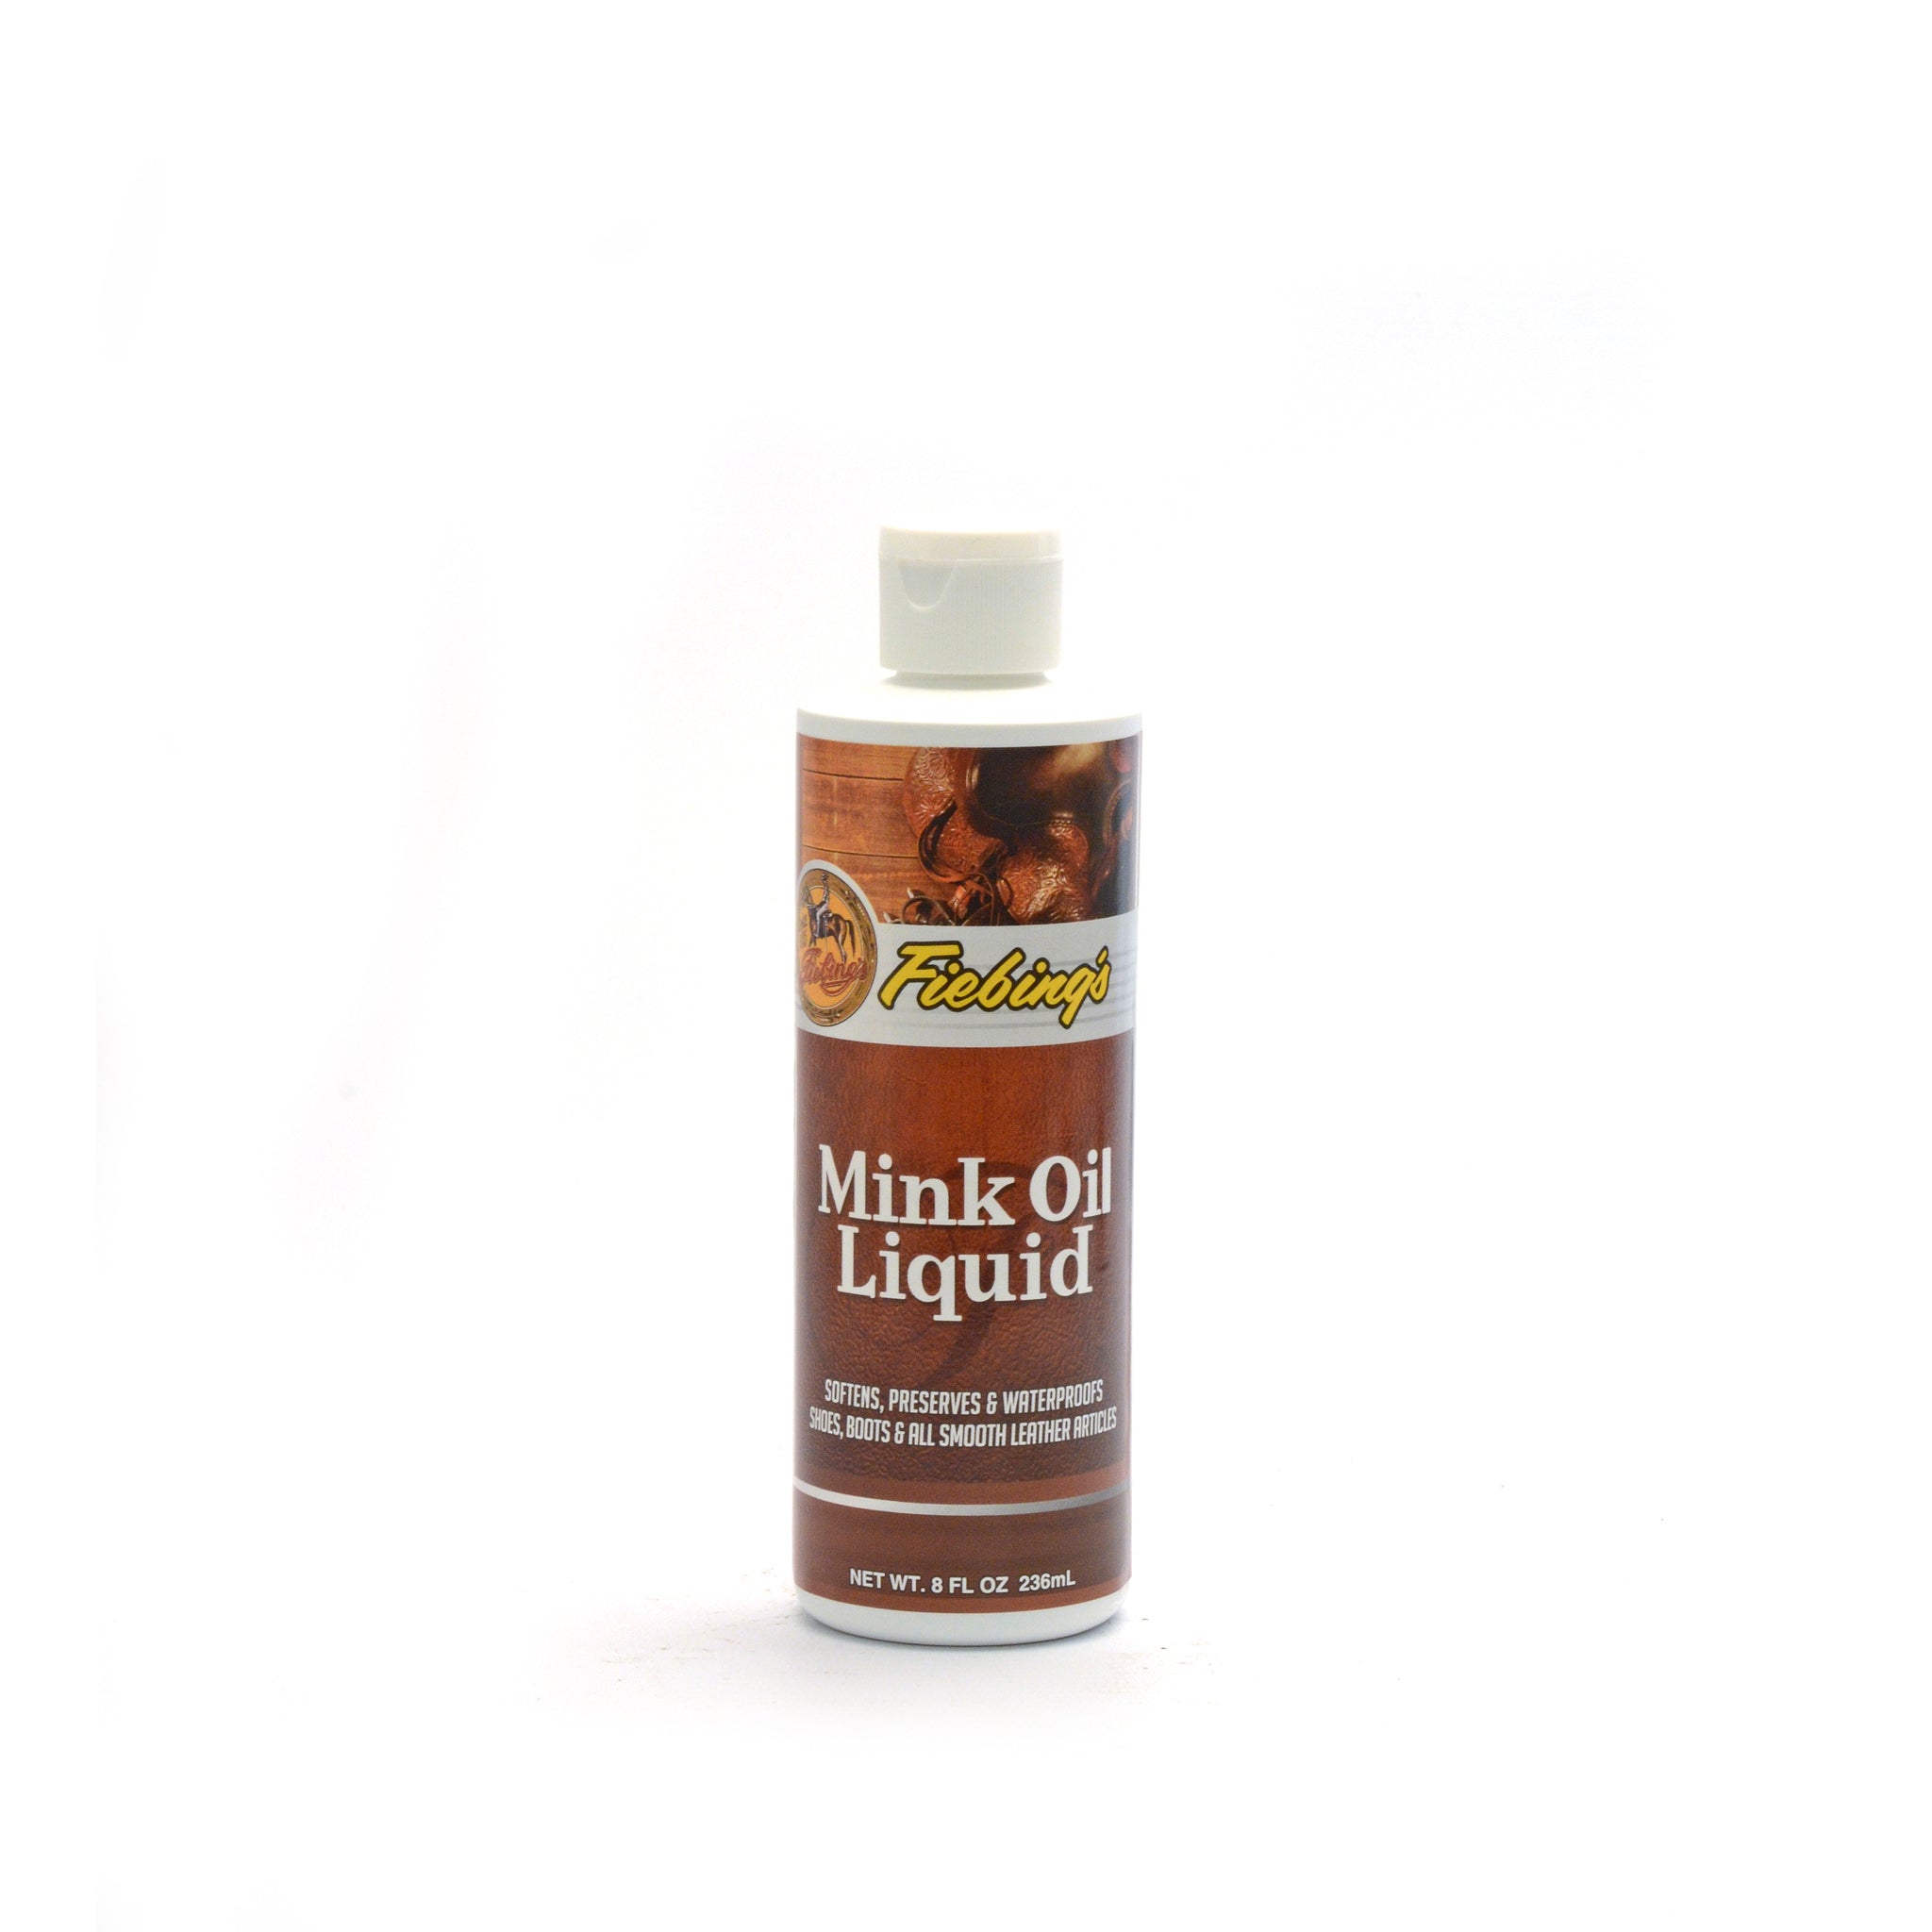 Fiebing's Mink Oil Liquid from Identity Leathercraft